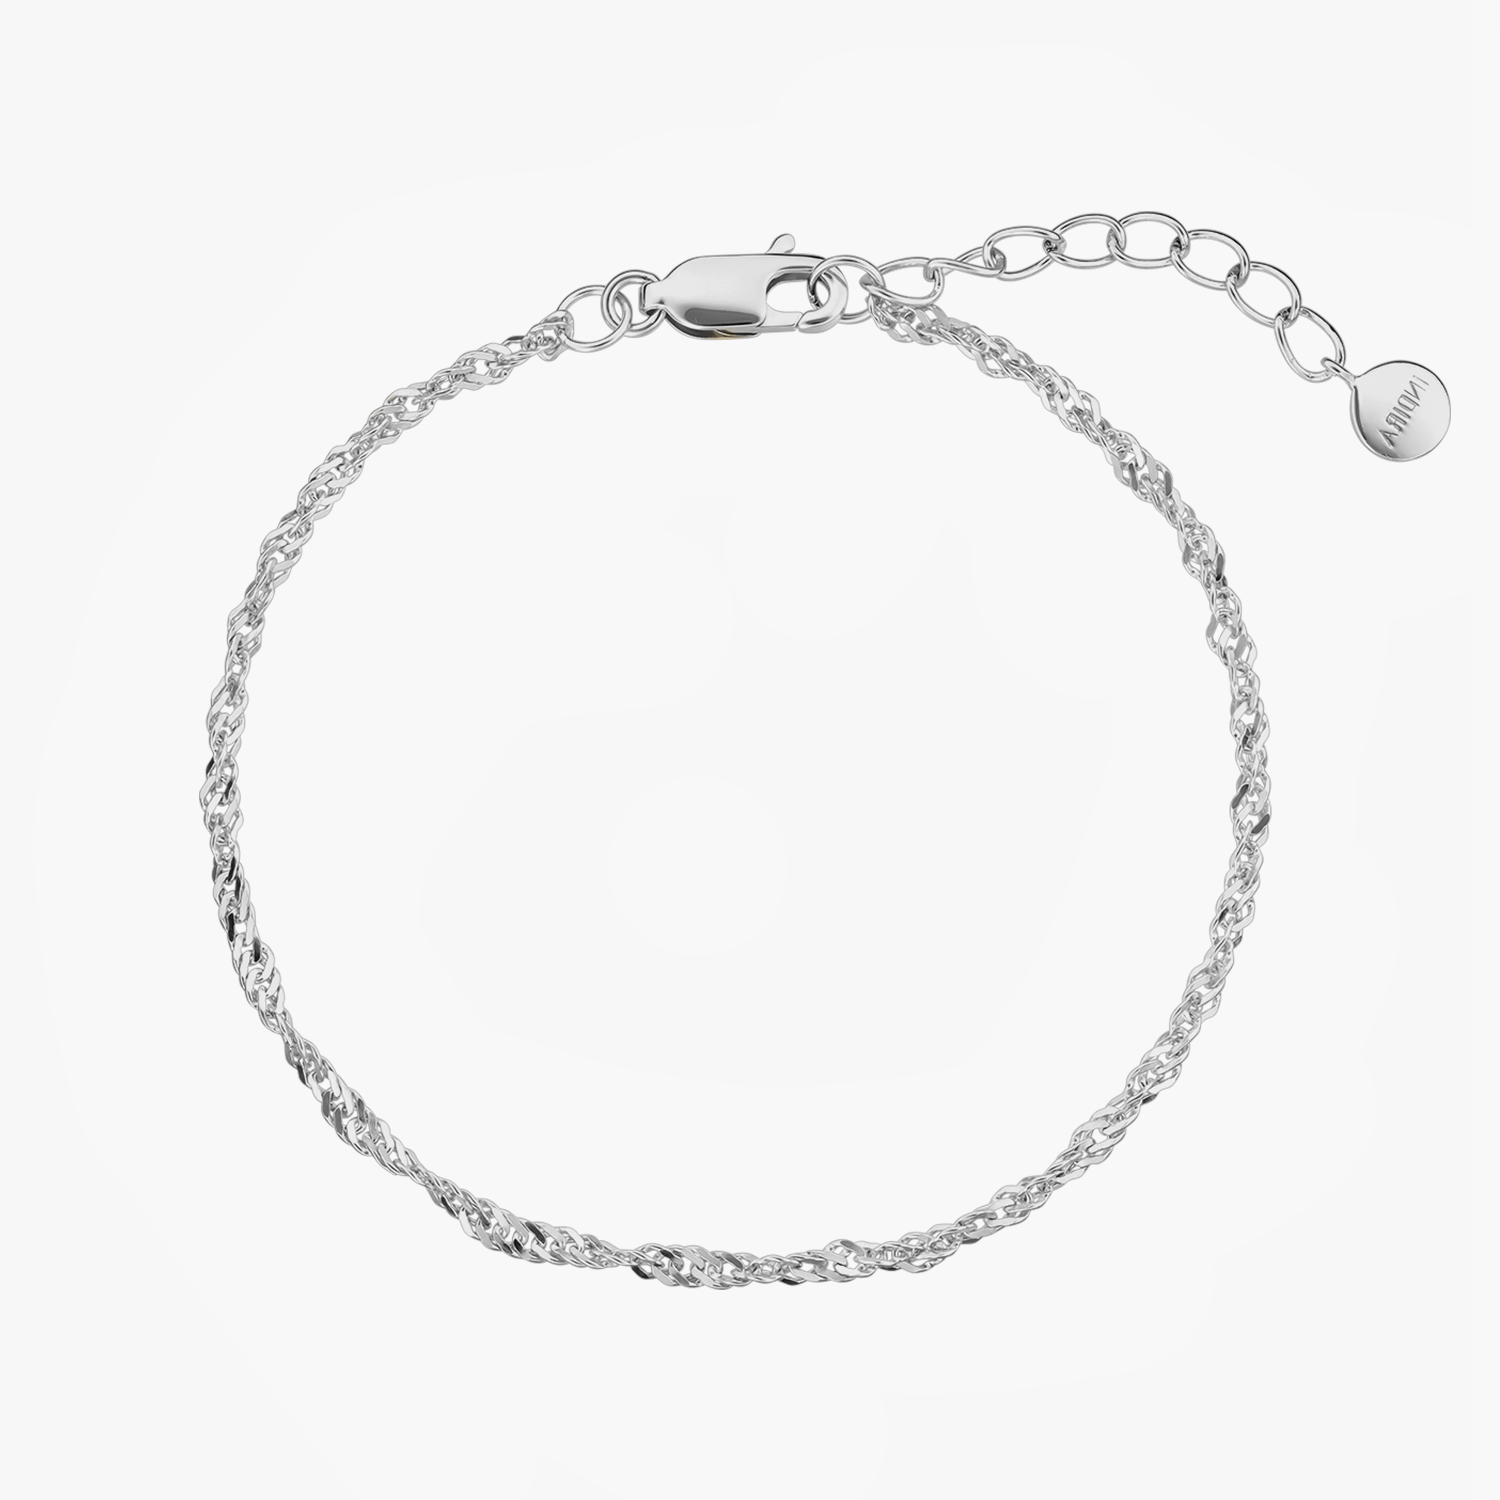 Singapore silver bracelet